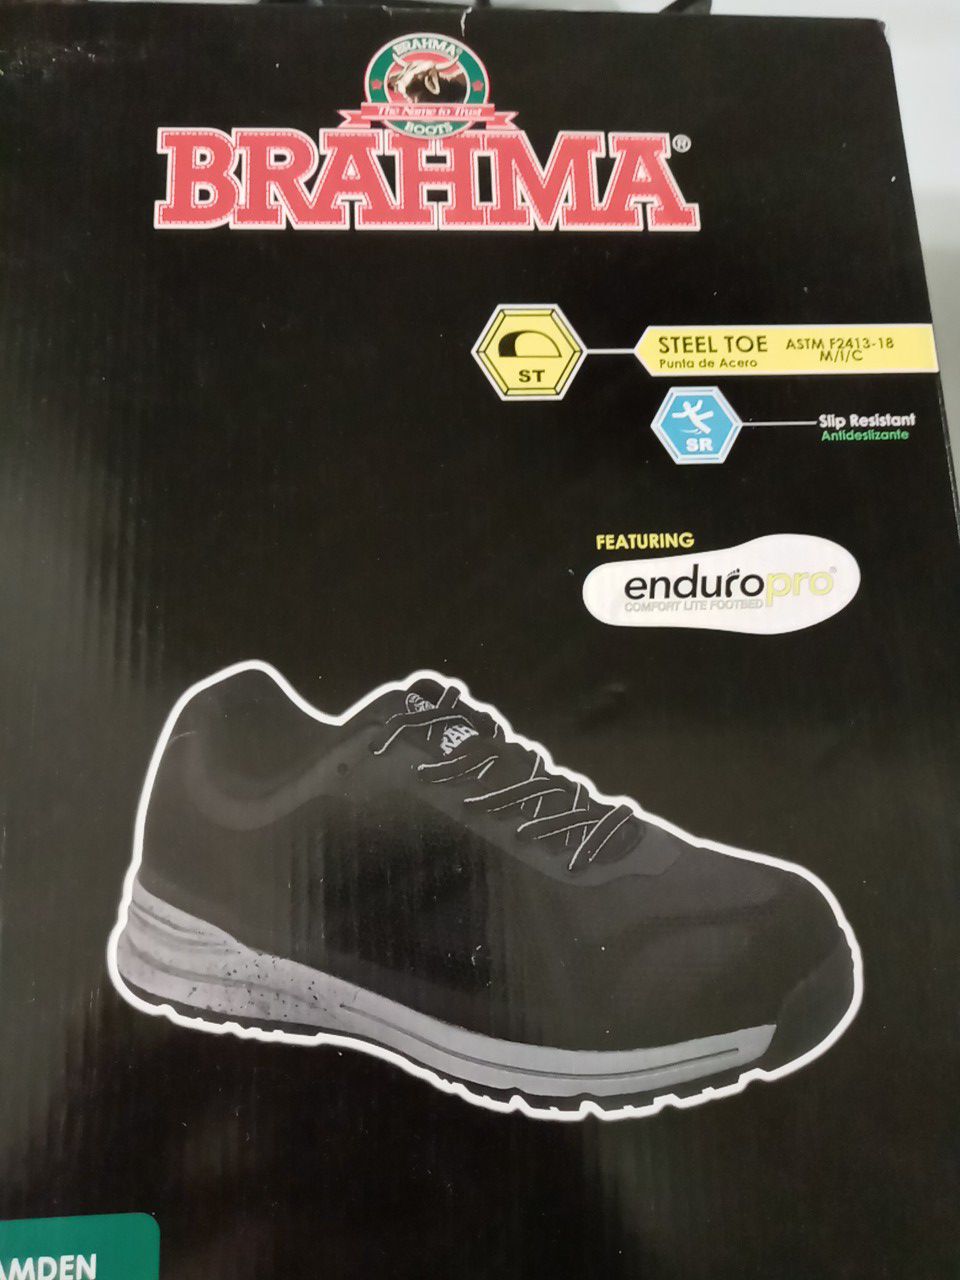 Steel toe shoes - Braham men - Size 10